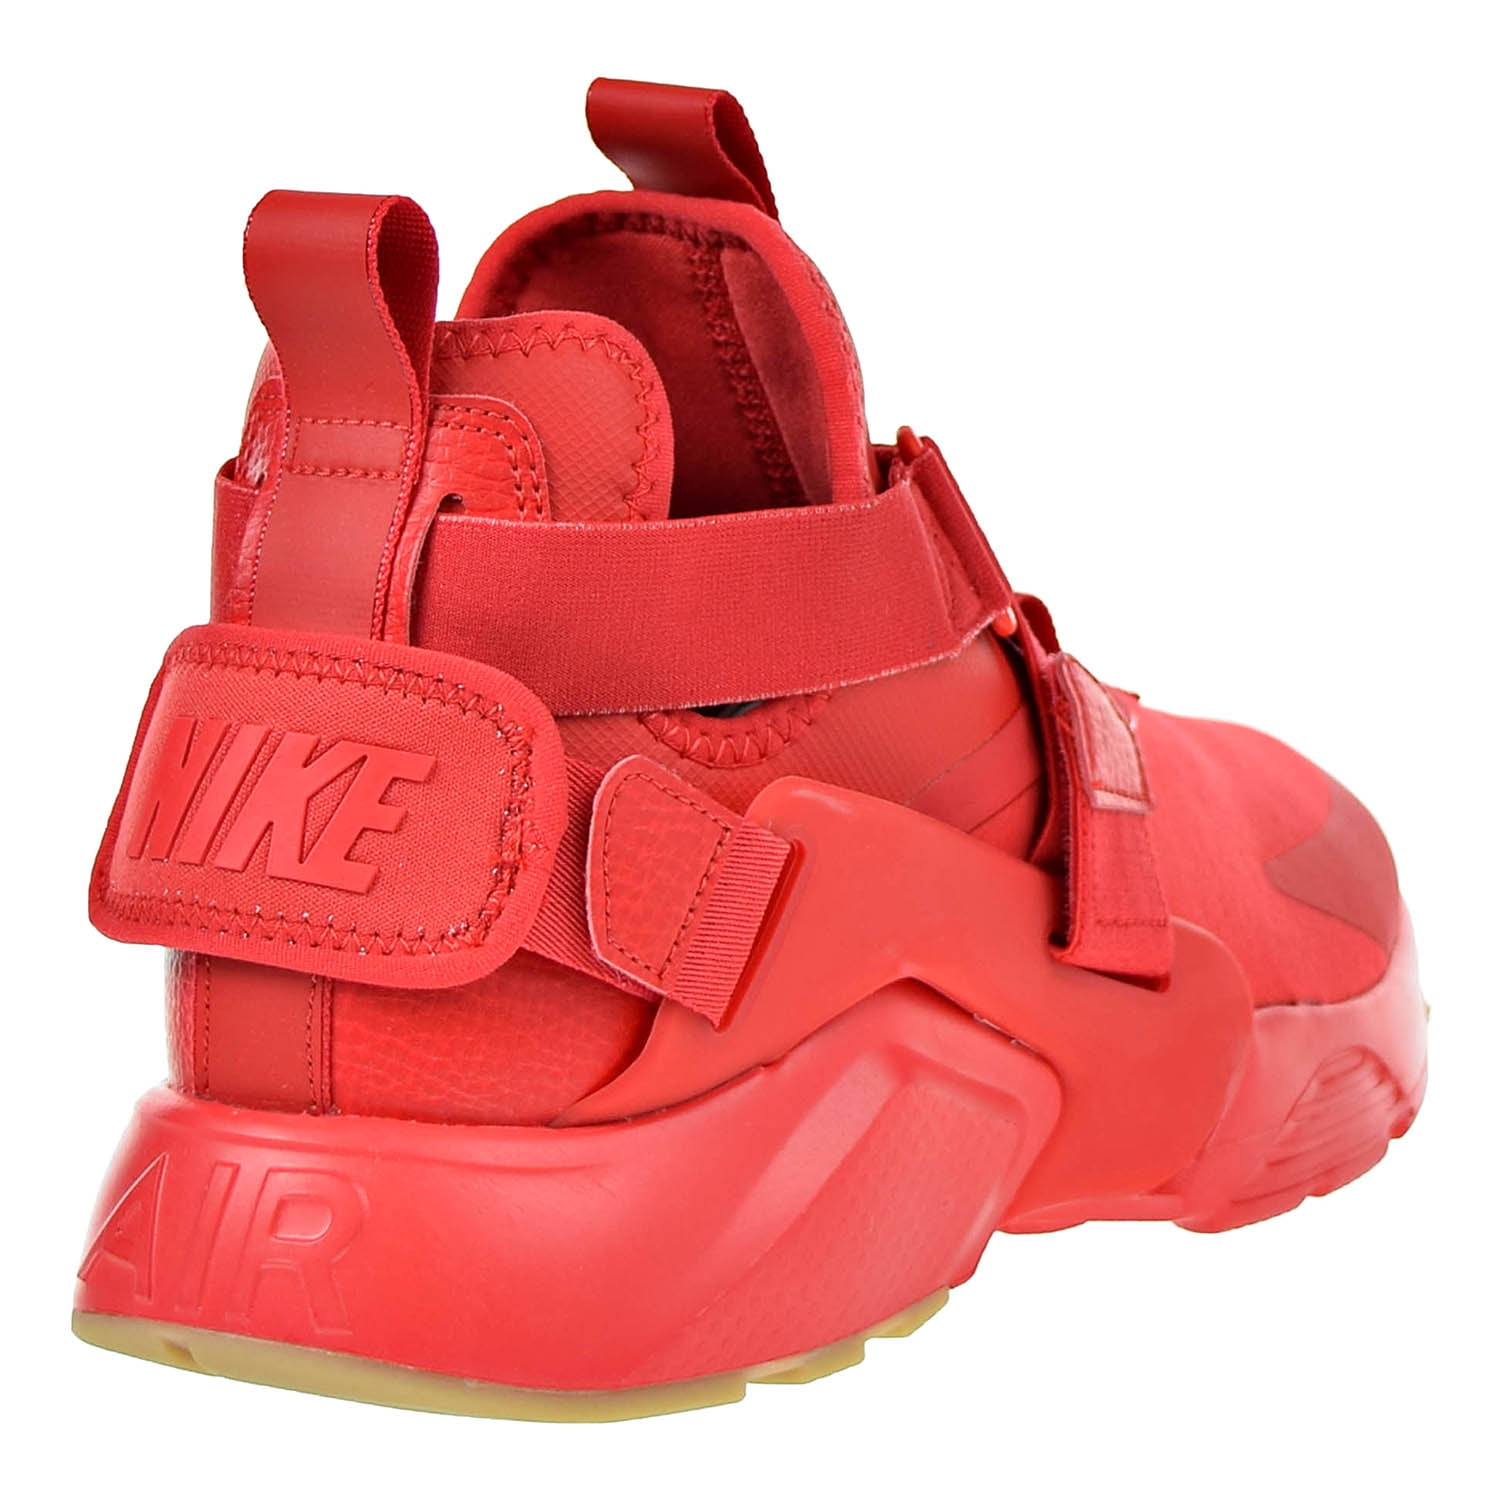 Nike Air Huarache City Bright Supreme Citron Shoes AH6787-401 Women's Size 9